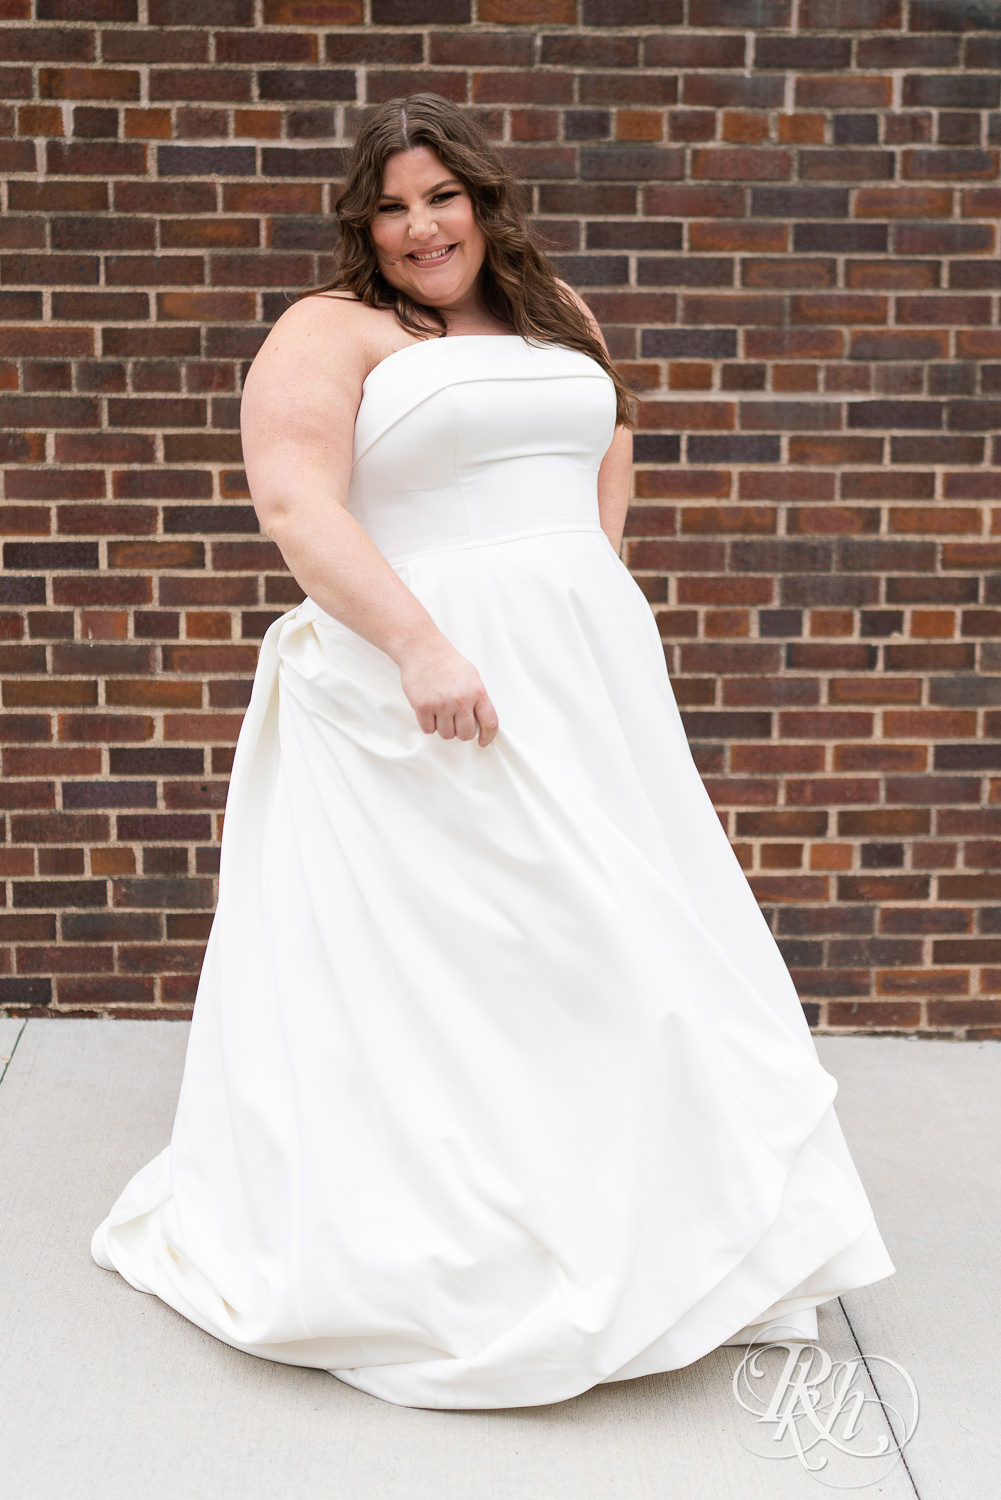 Plus size bride smiling in wedding dress in Minneapolis, Minnesota.